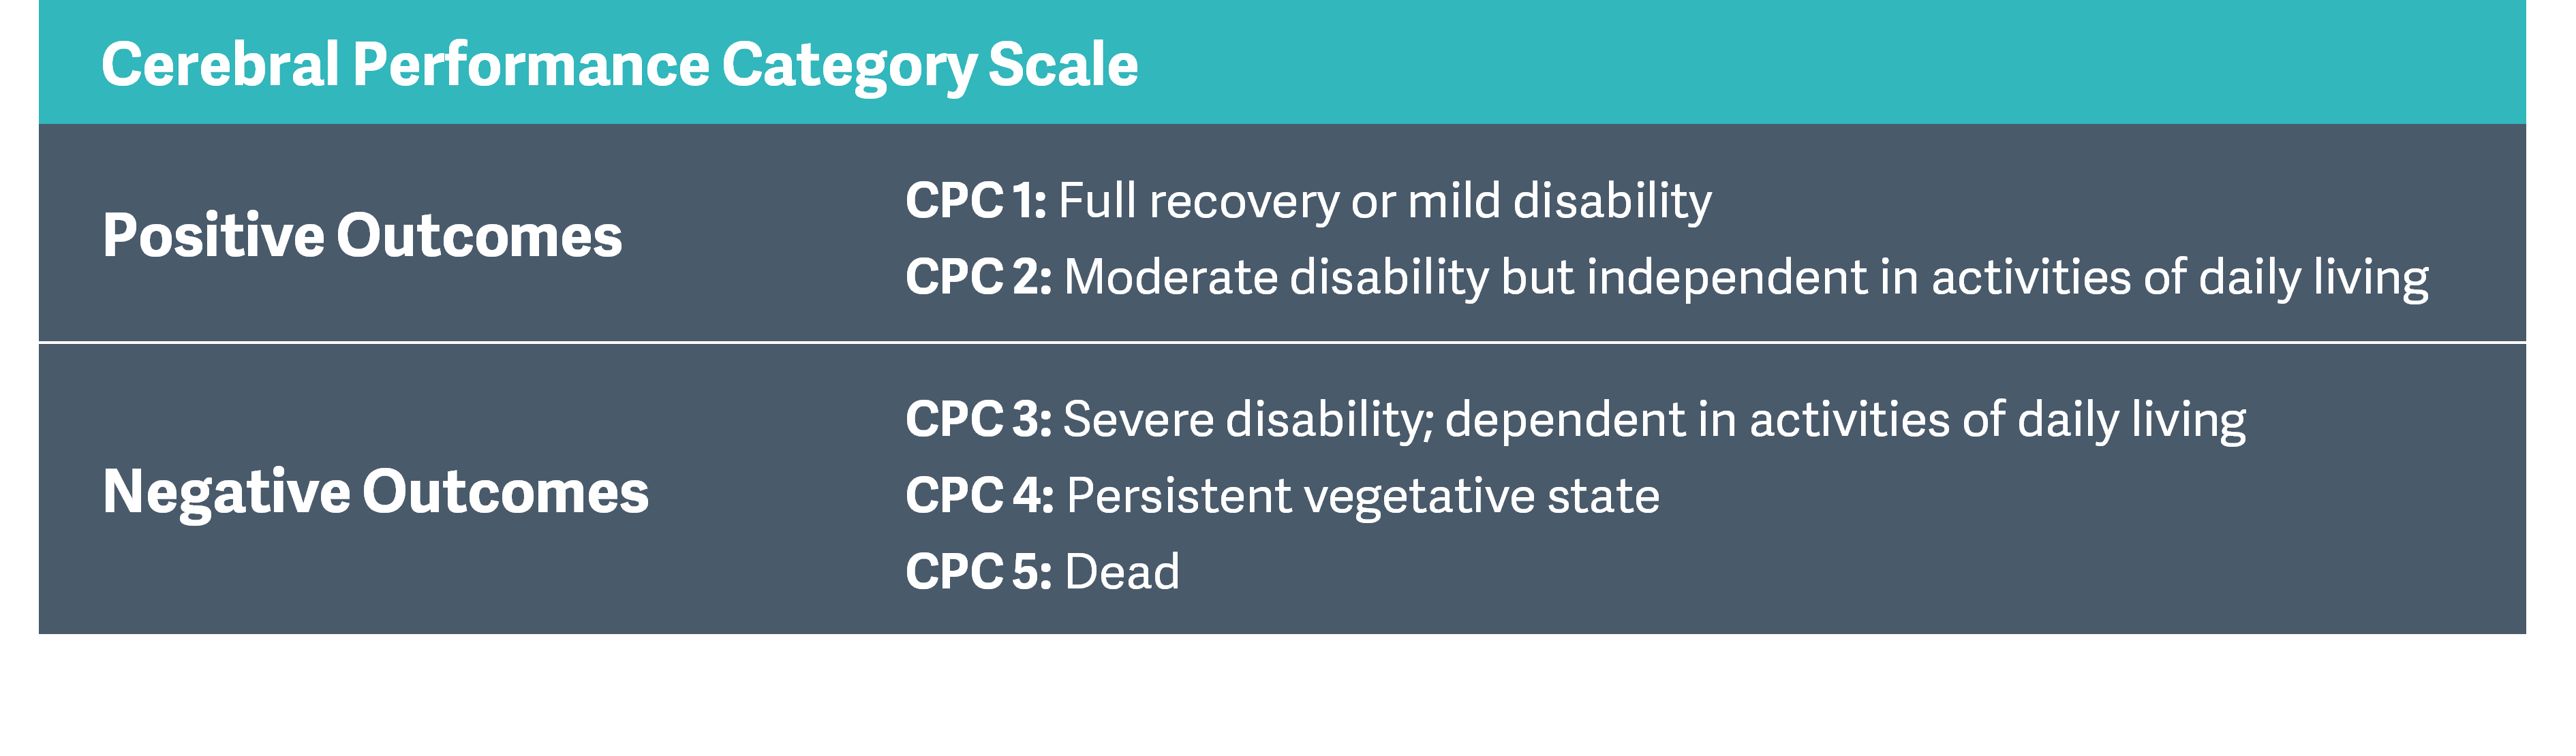 CPC Scale Grafik.png